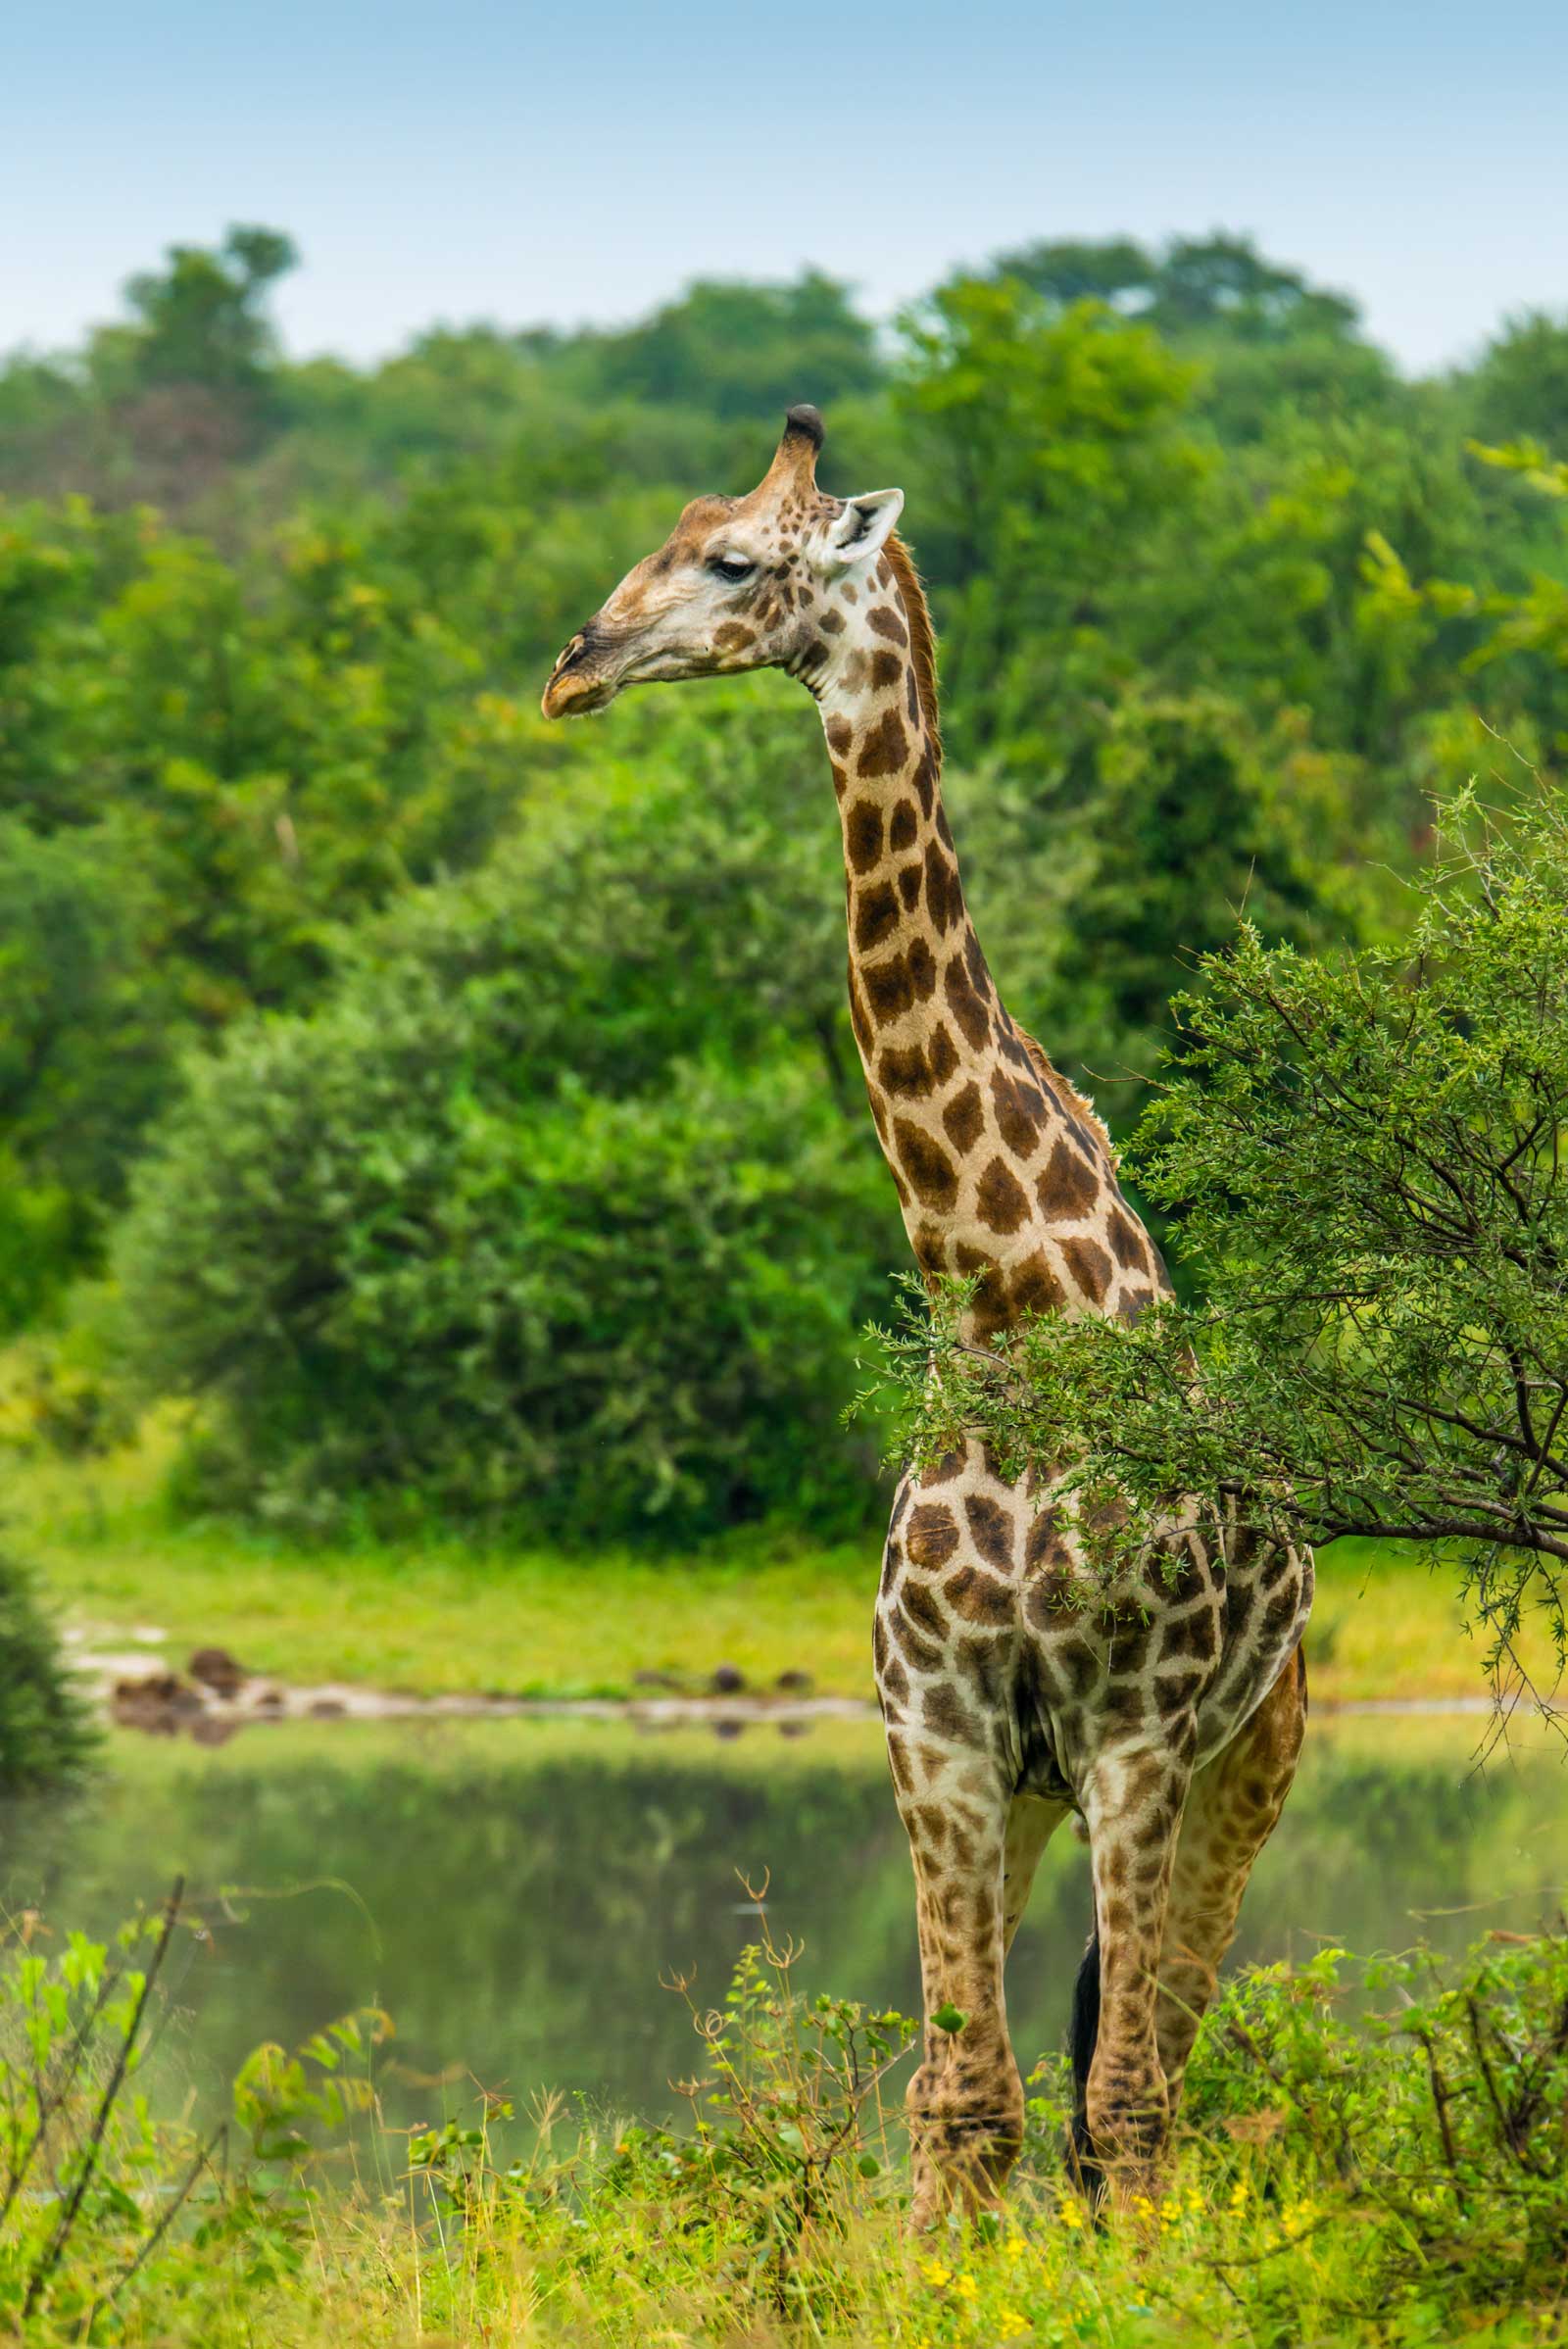 Giraffe profile by Kevin MacLaughlin